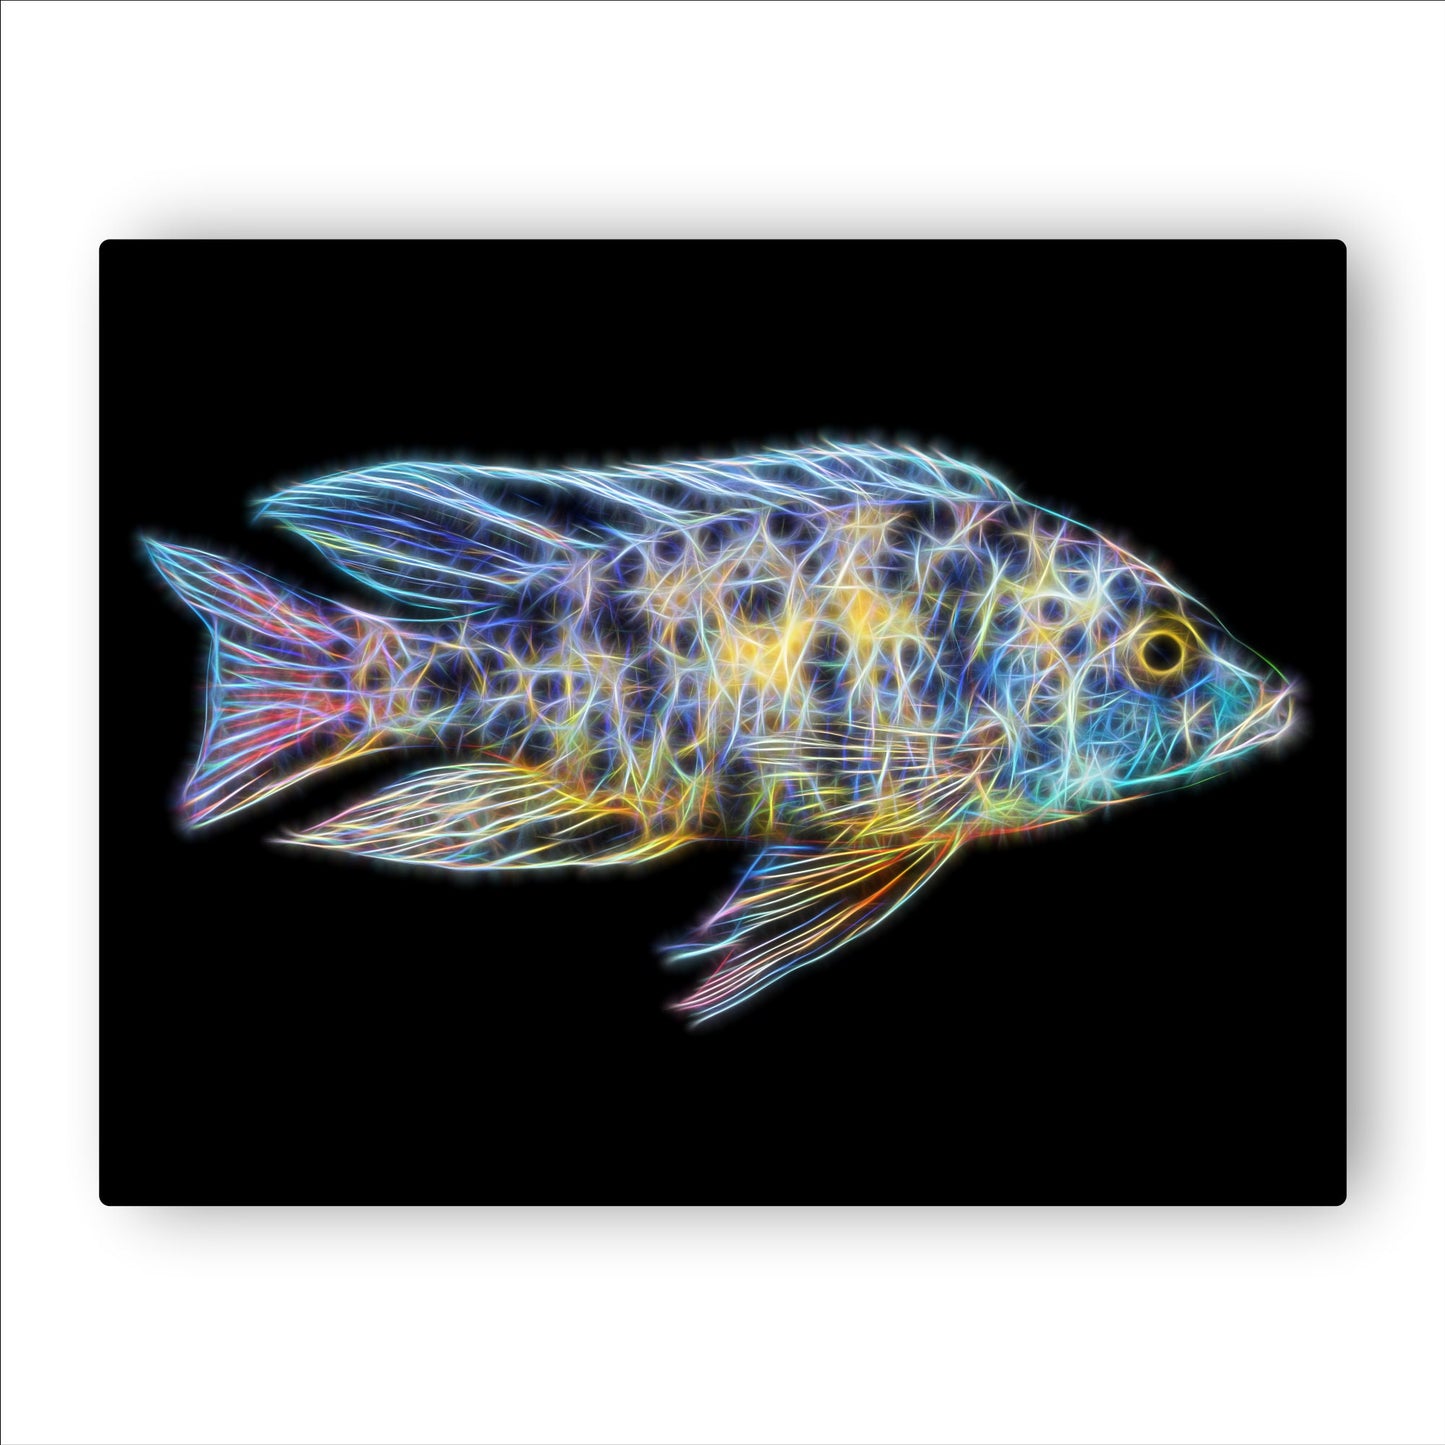 Yellow OB Peacock Cichlid Fish Print with Stunning Fractal Art Design. Aulonocara